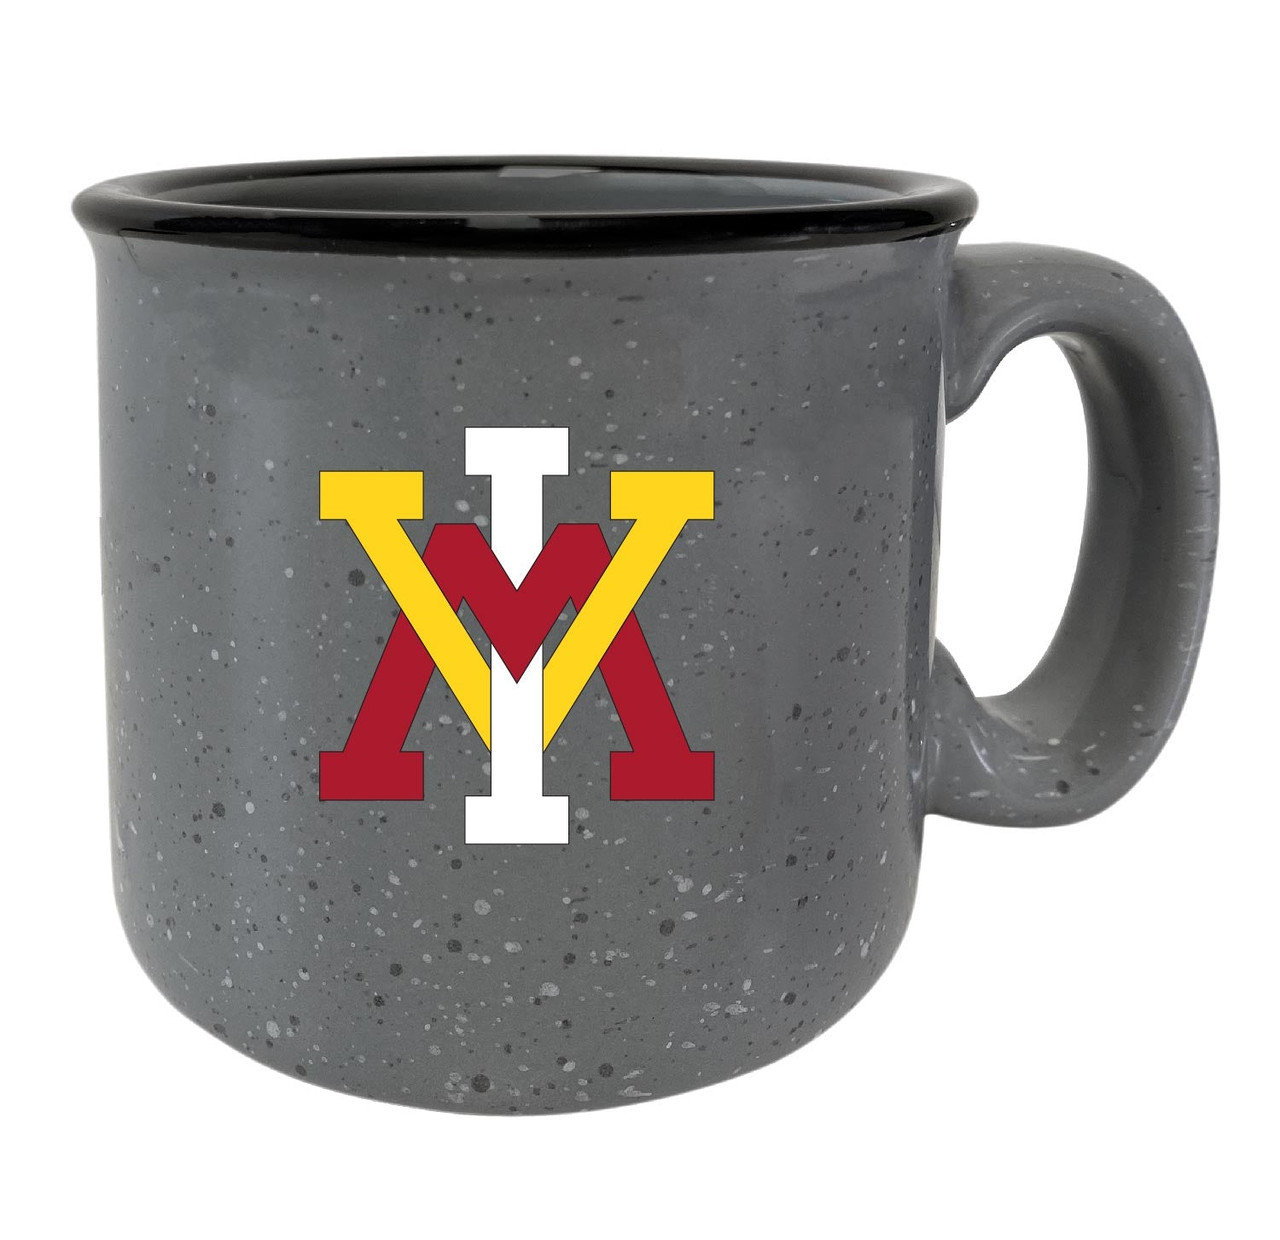 VMI Keydets 8 oz Speckled Ceramic Camper Coffee Mug (Gray).